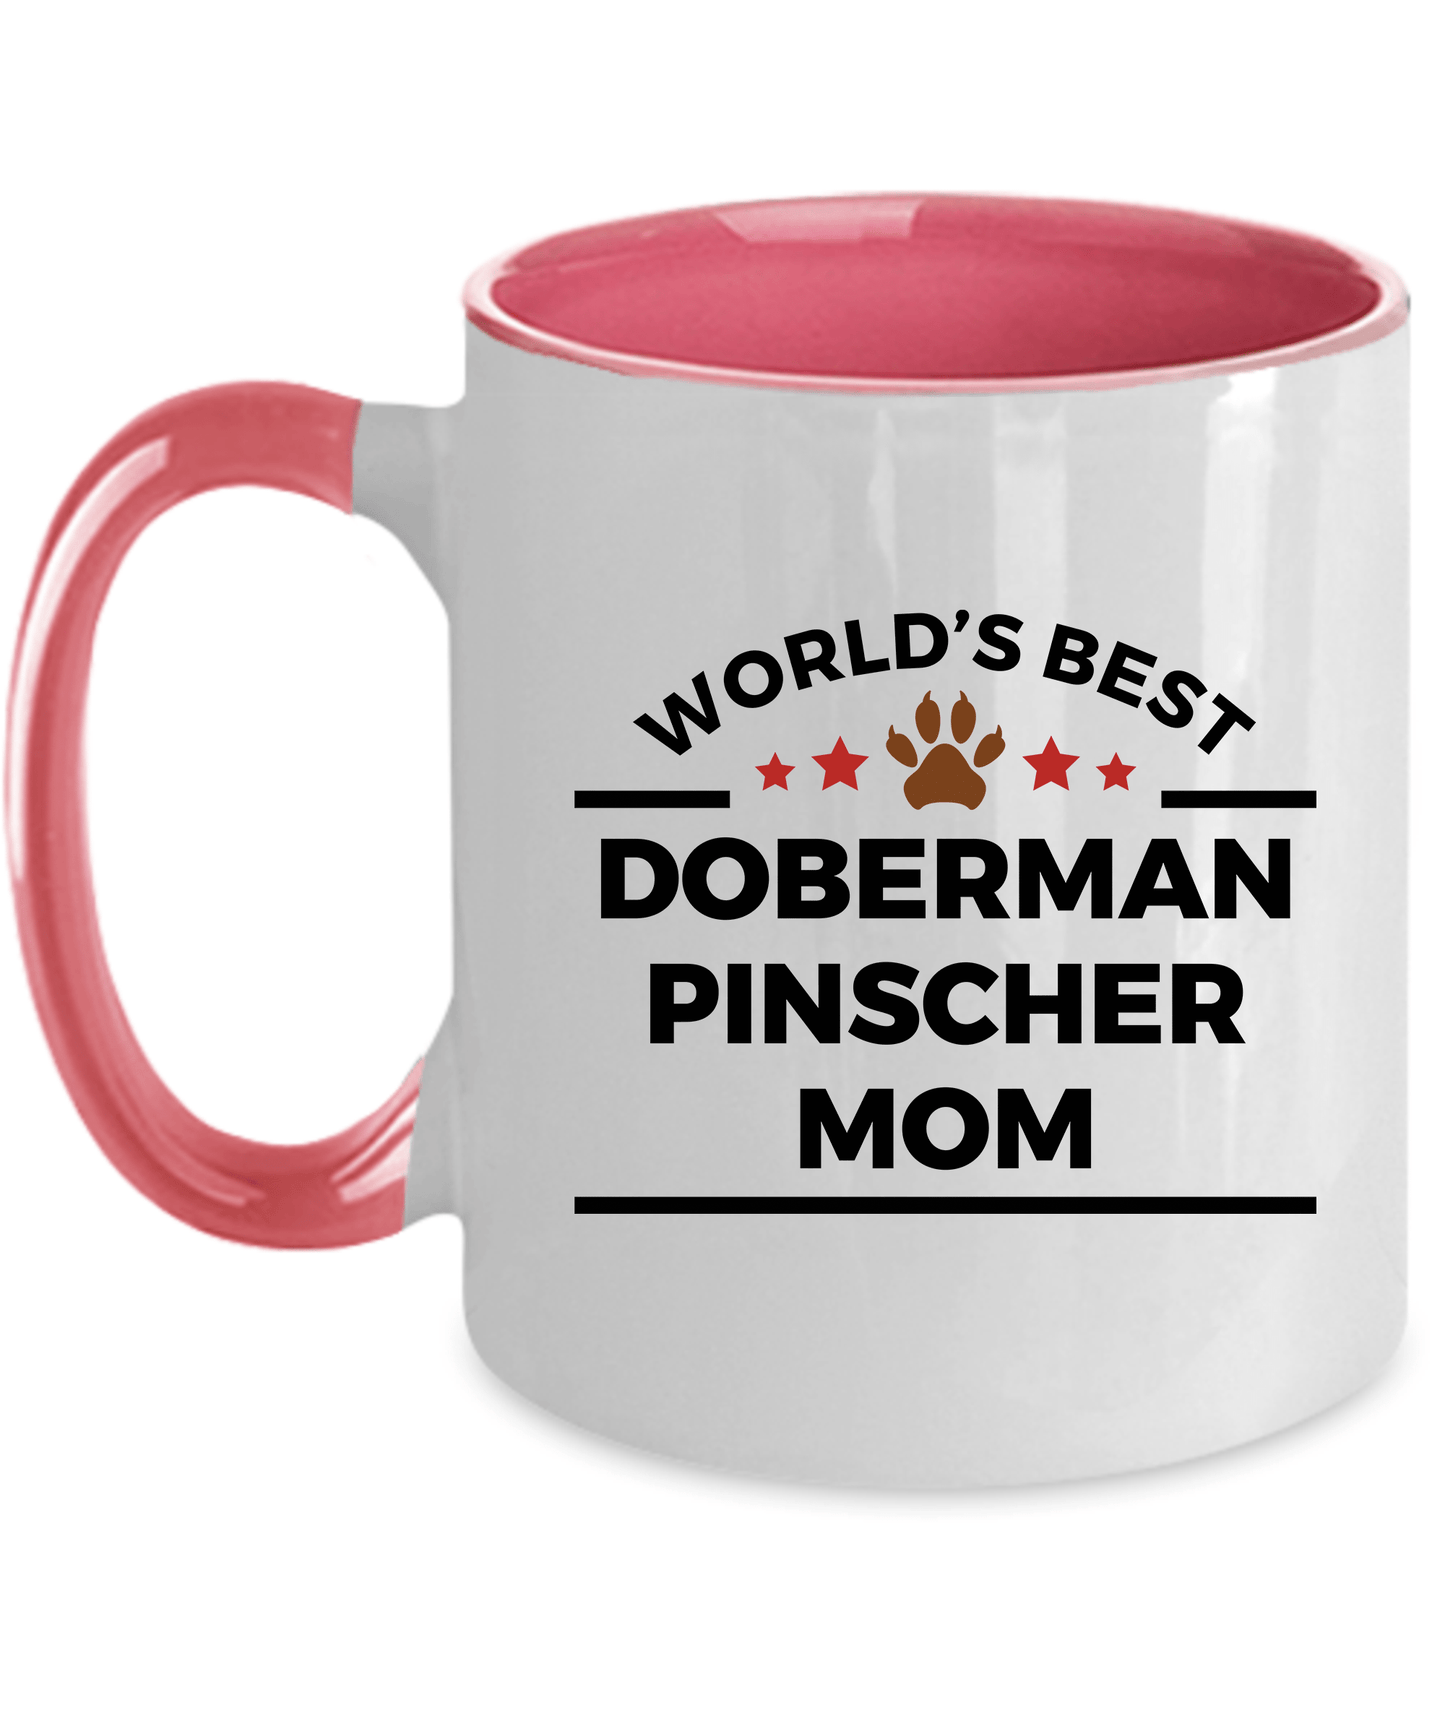 Doberman Pinscher Dog Lover Gift World's Best Mom Mother's Day Birthday Coffee Mug